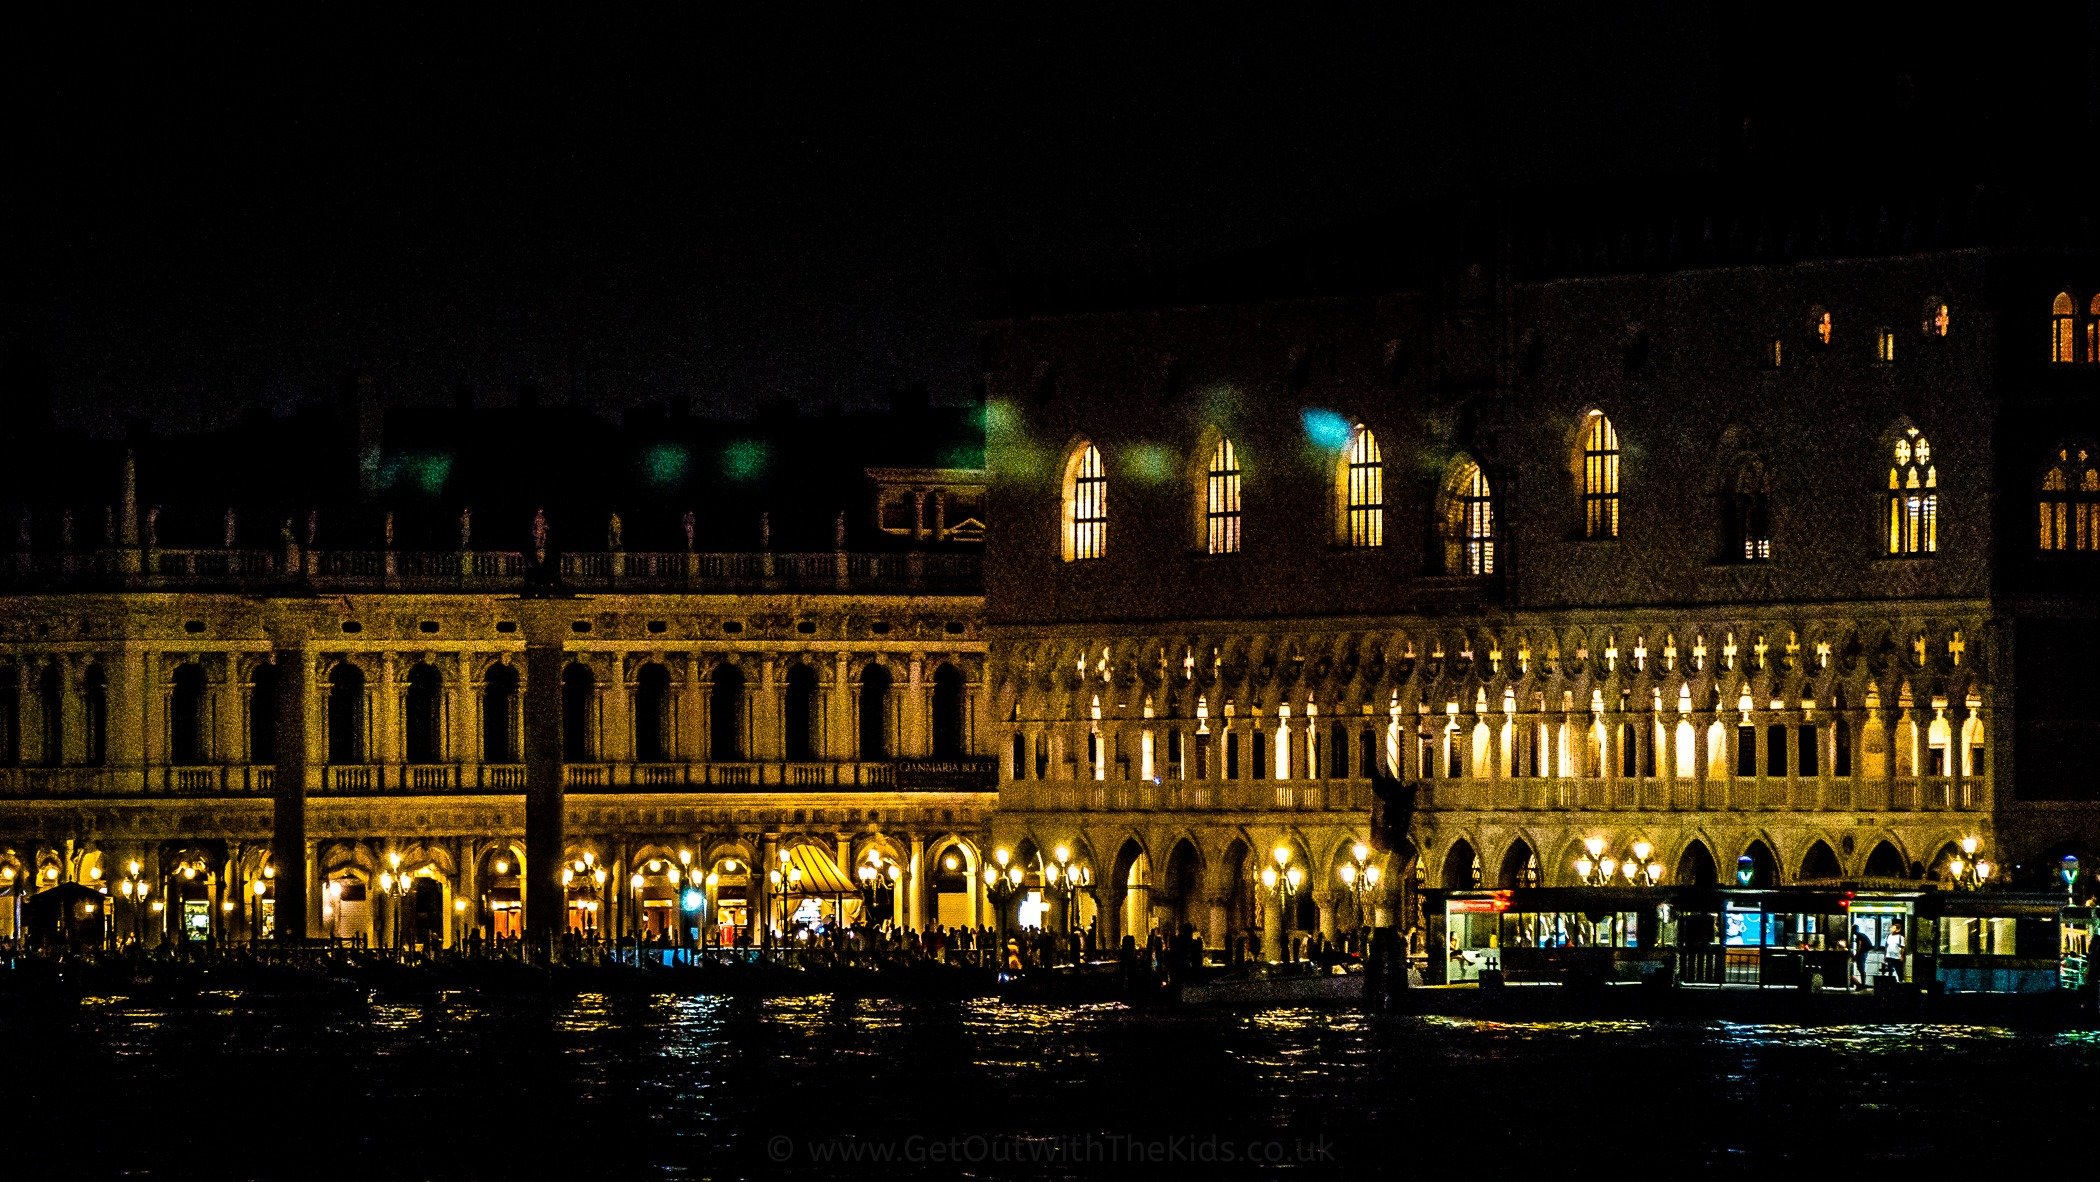 A Venetian palace lit up at night